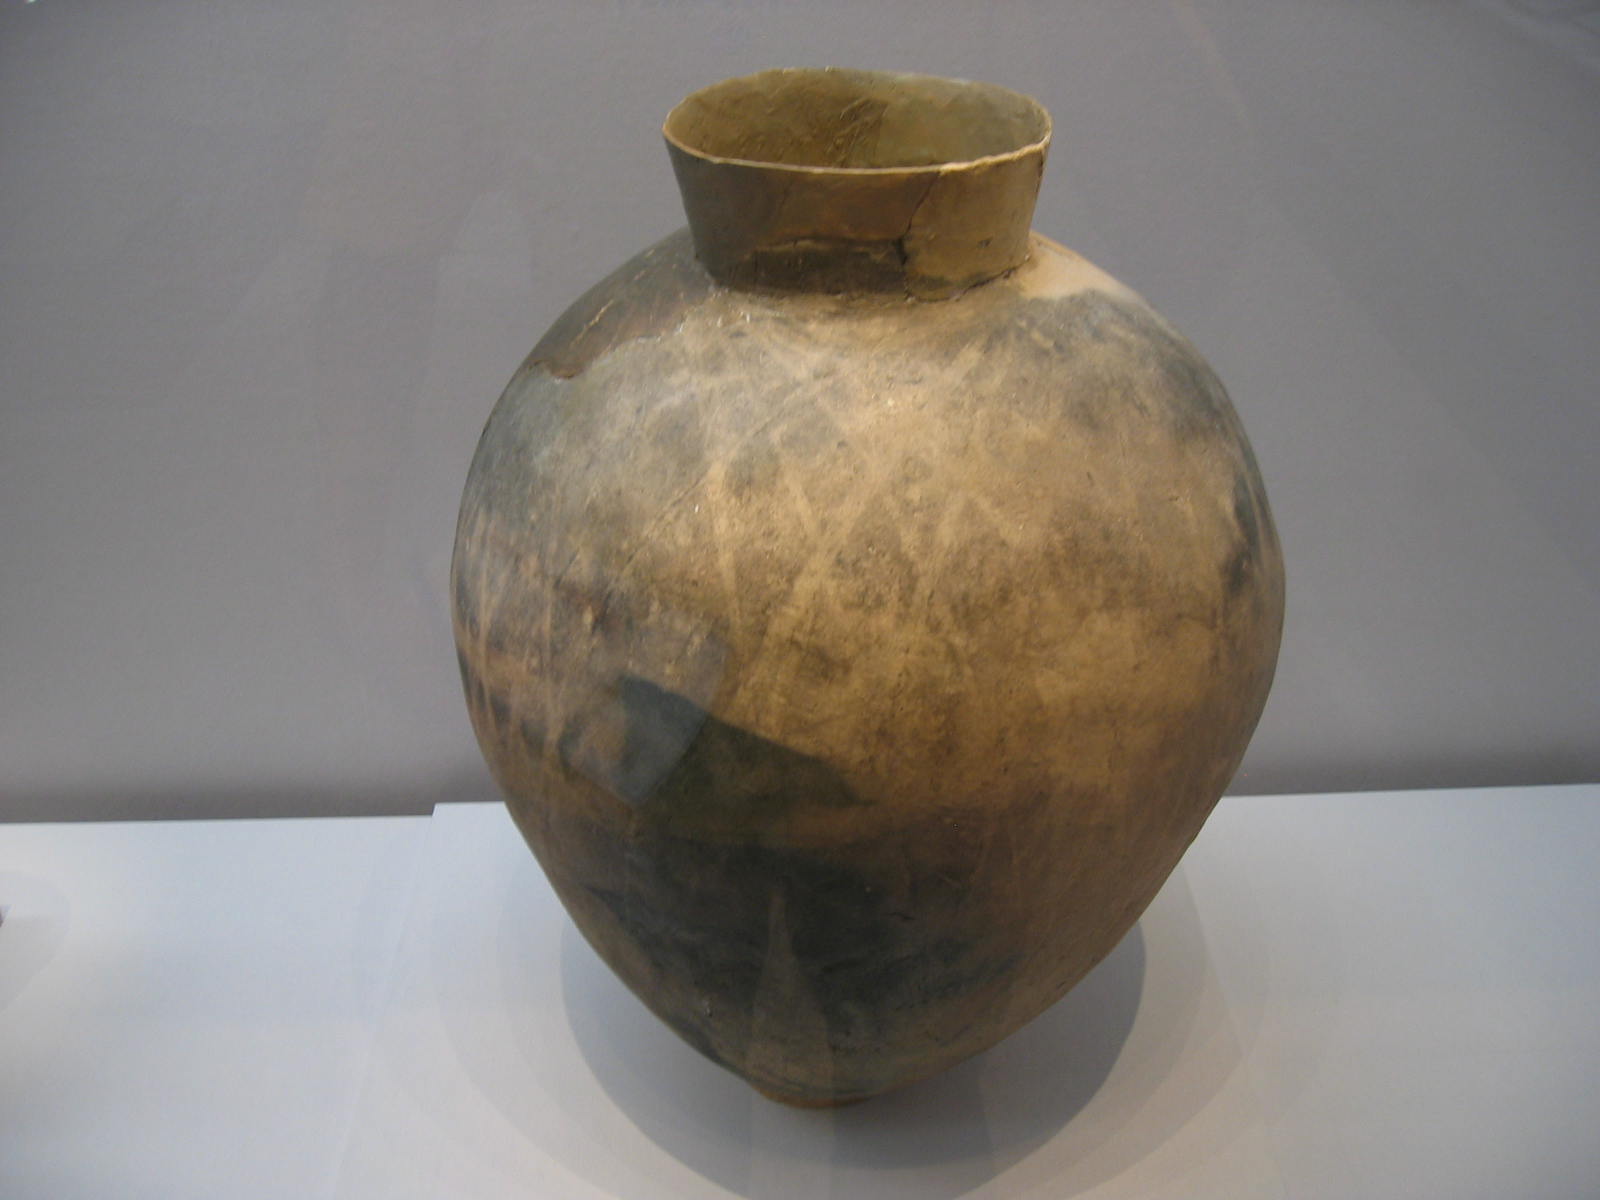 Mumun pottery period